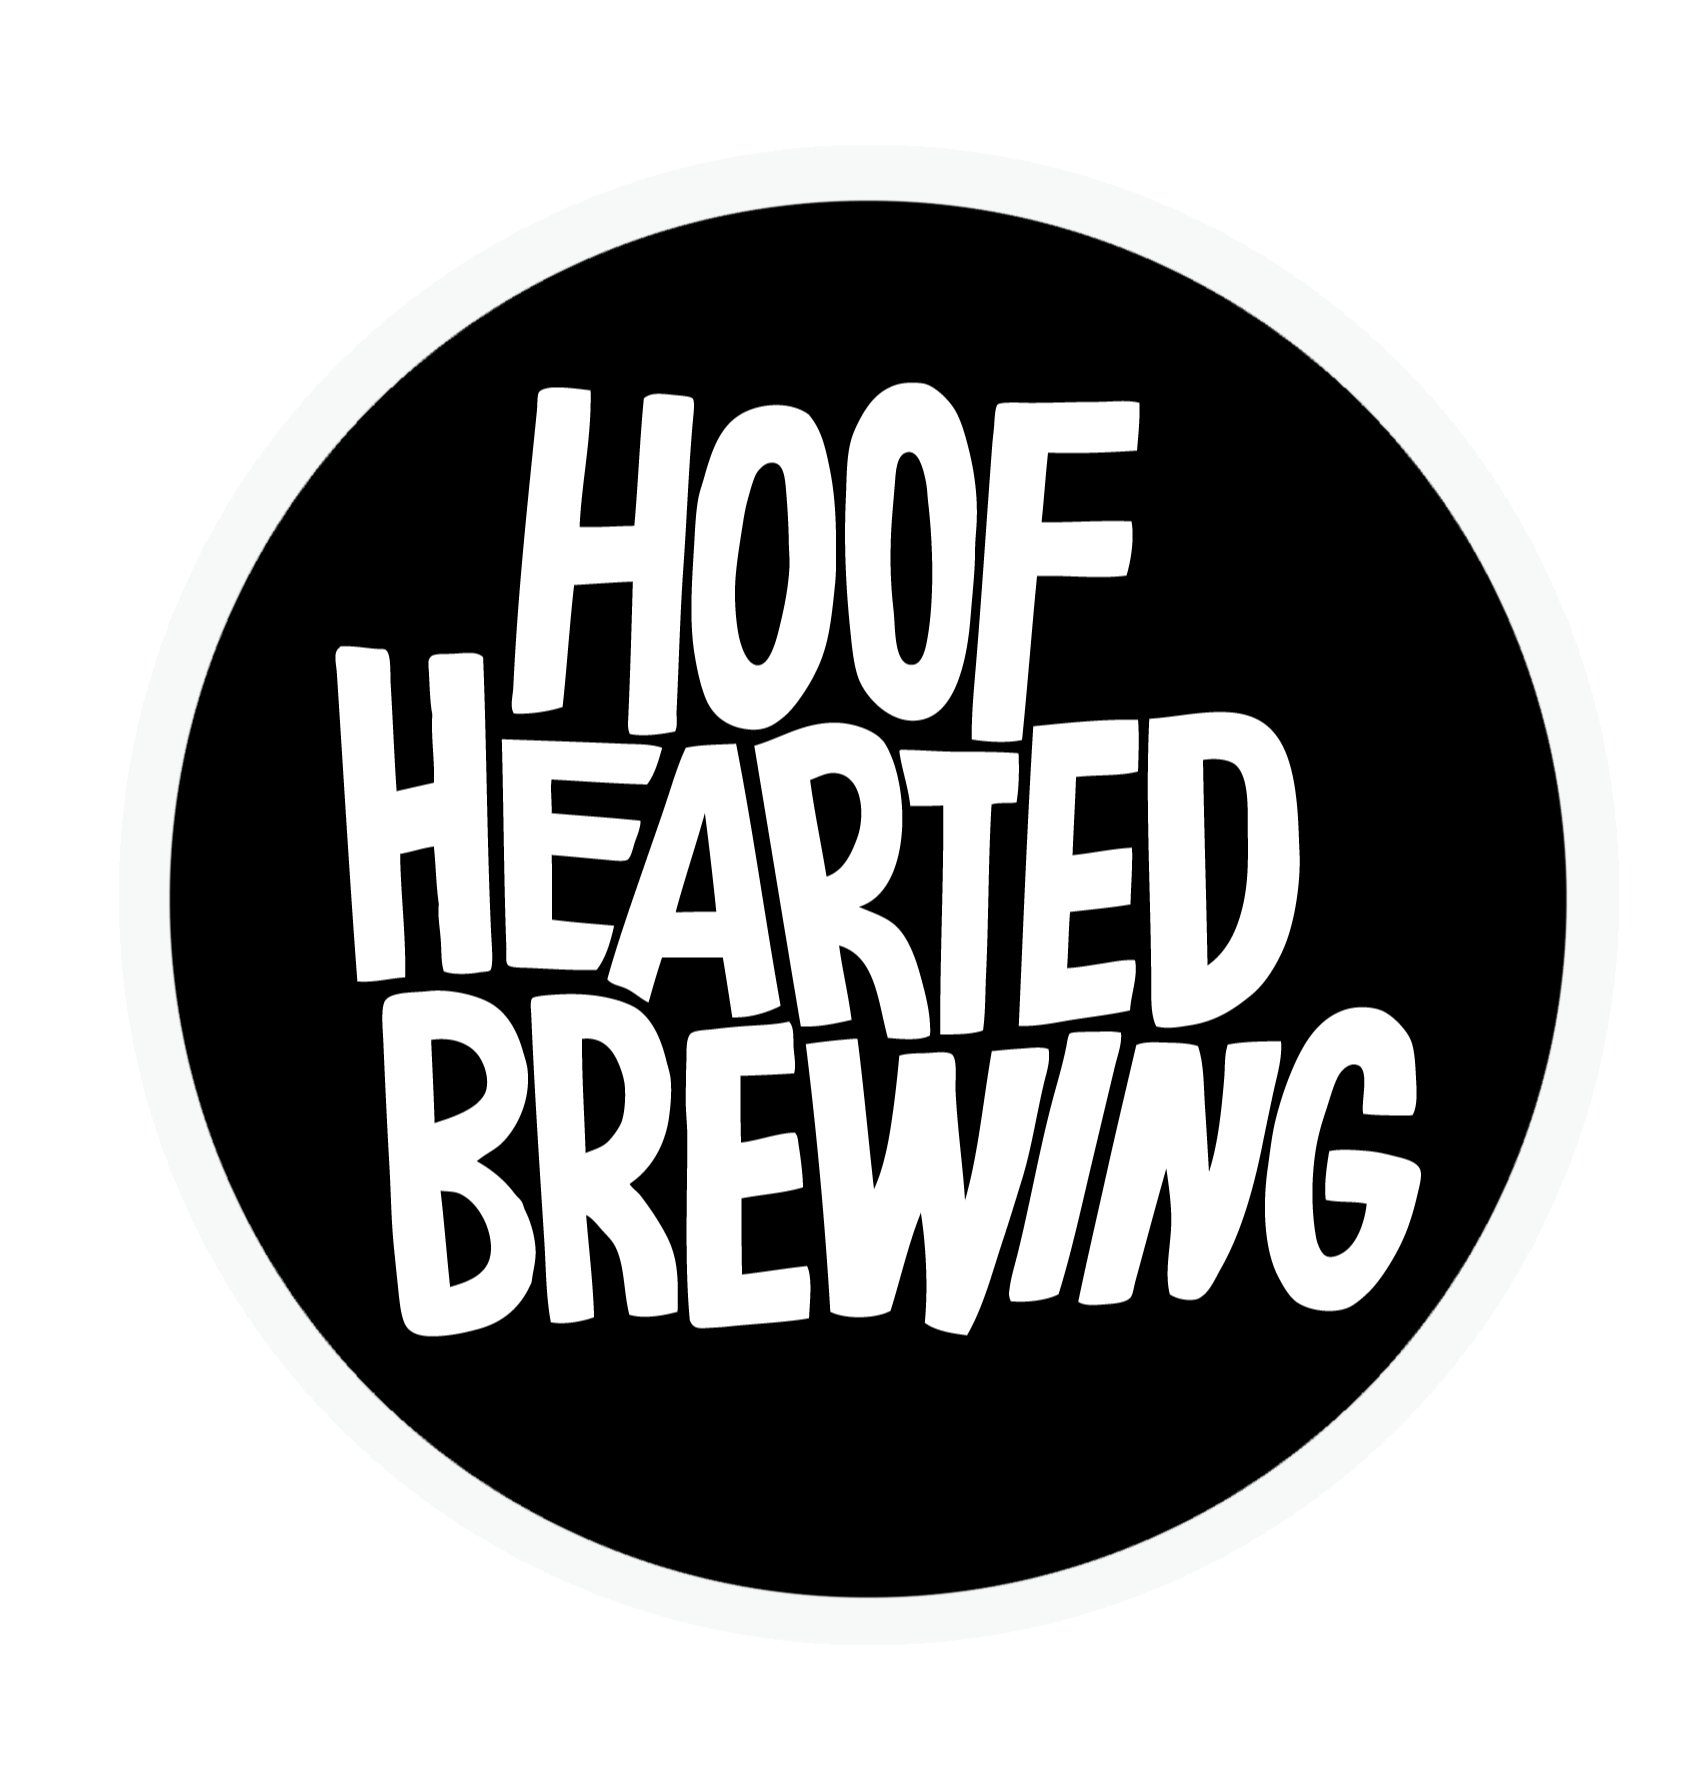 Hoof Hearted Brewing